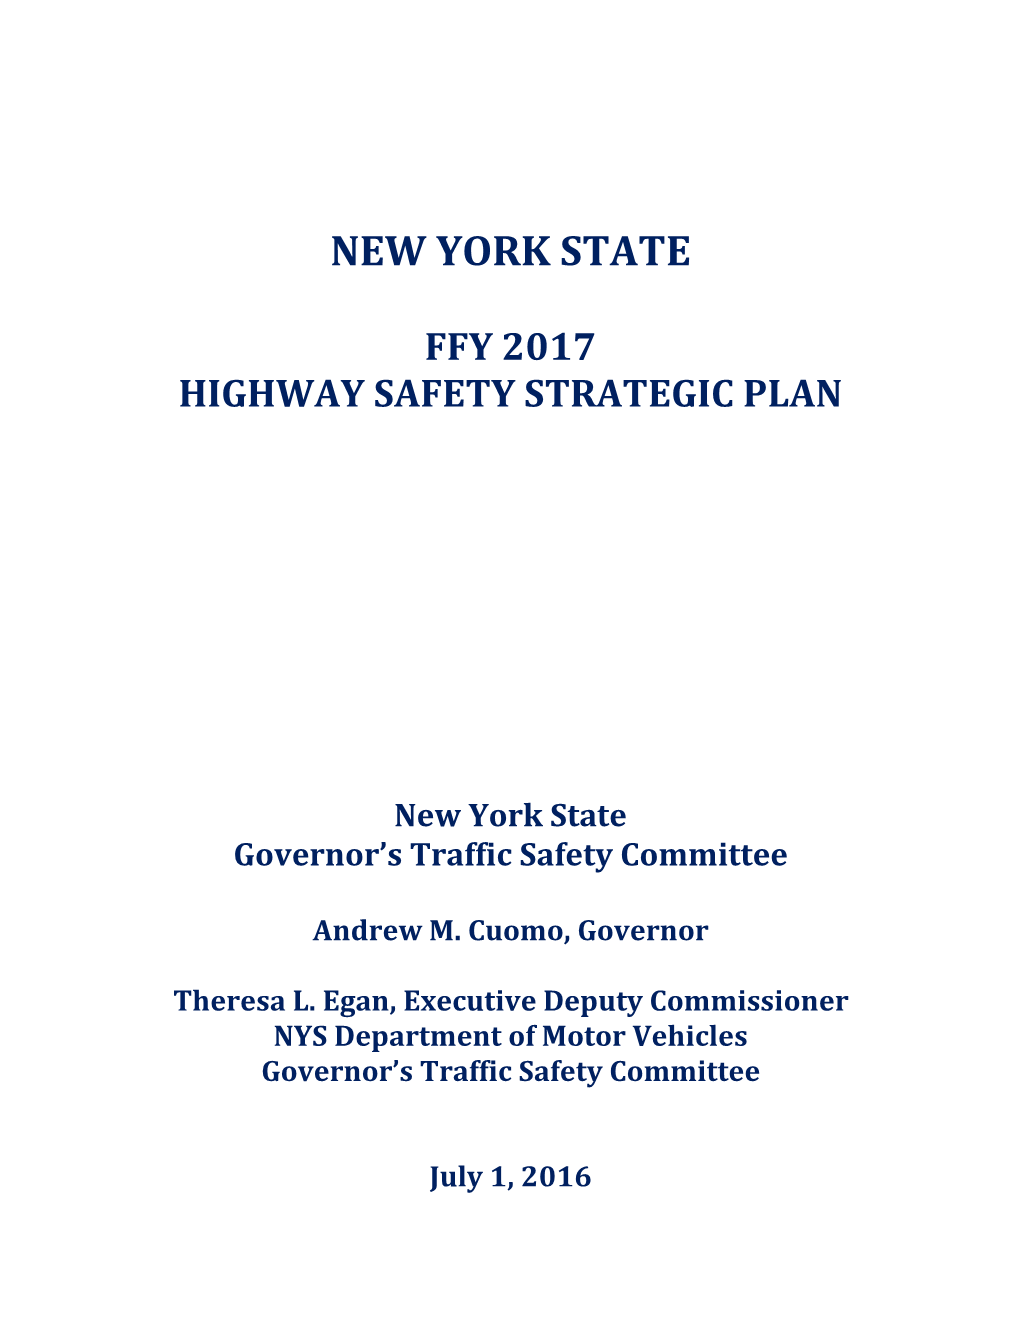 New York Highway Safety Plan FY2017